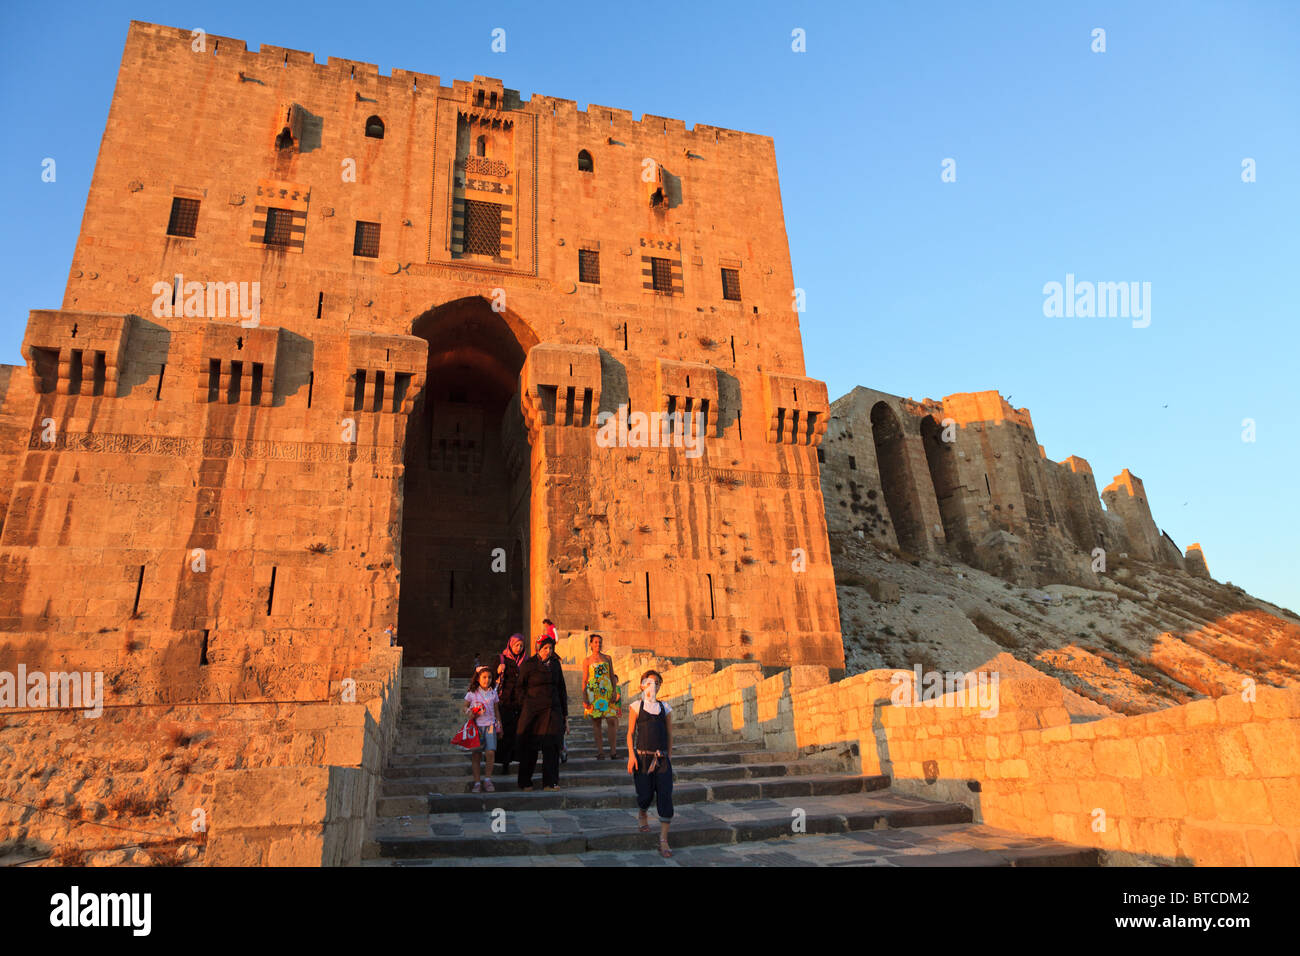 The citadel ( castle ) of Aleppo, Syria Stock Photo